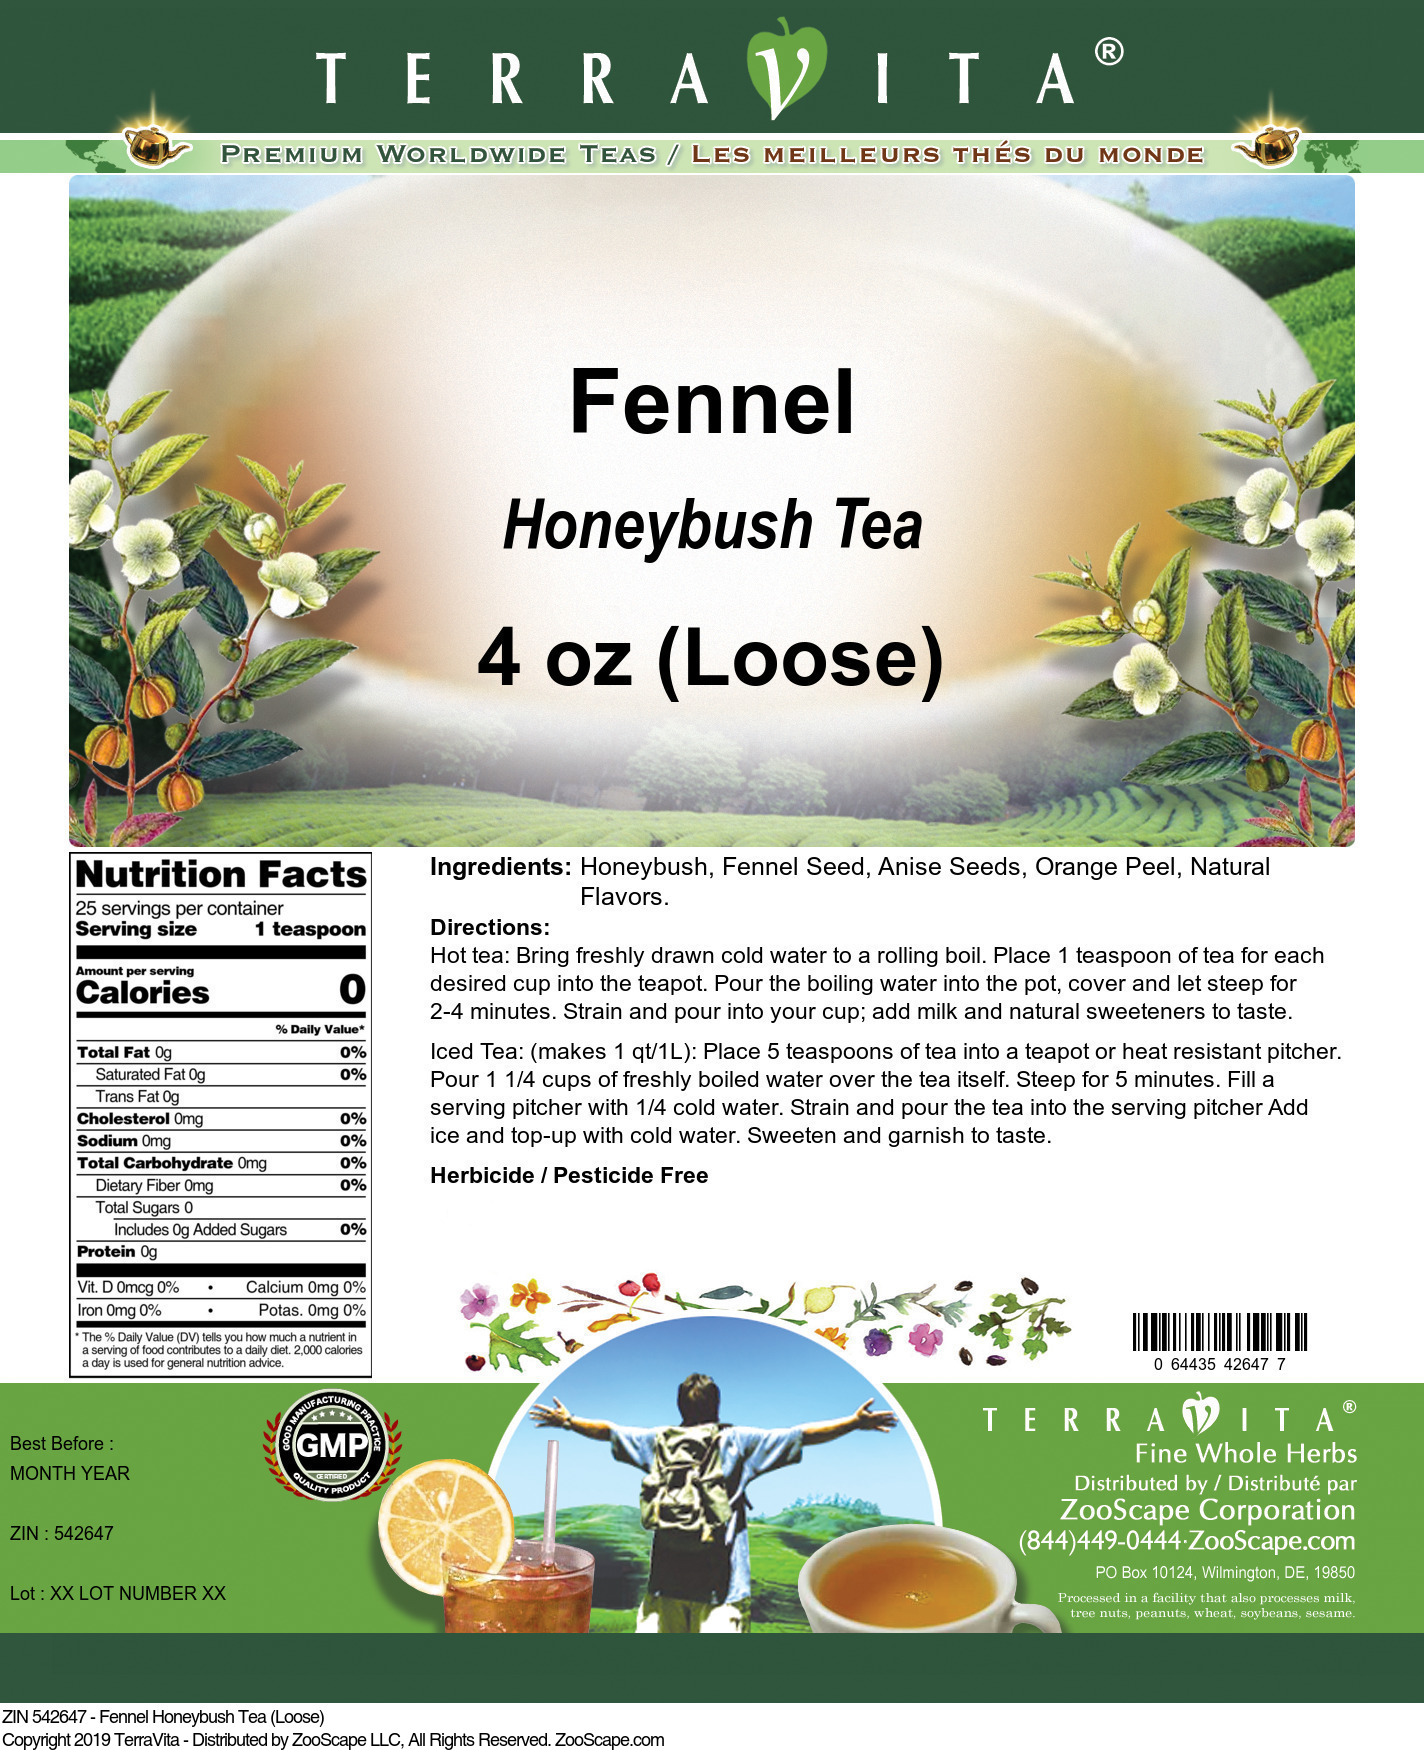 Fennel Honeybush Tea (Loose) - Label